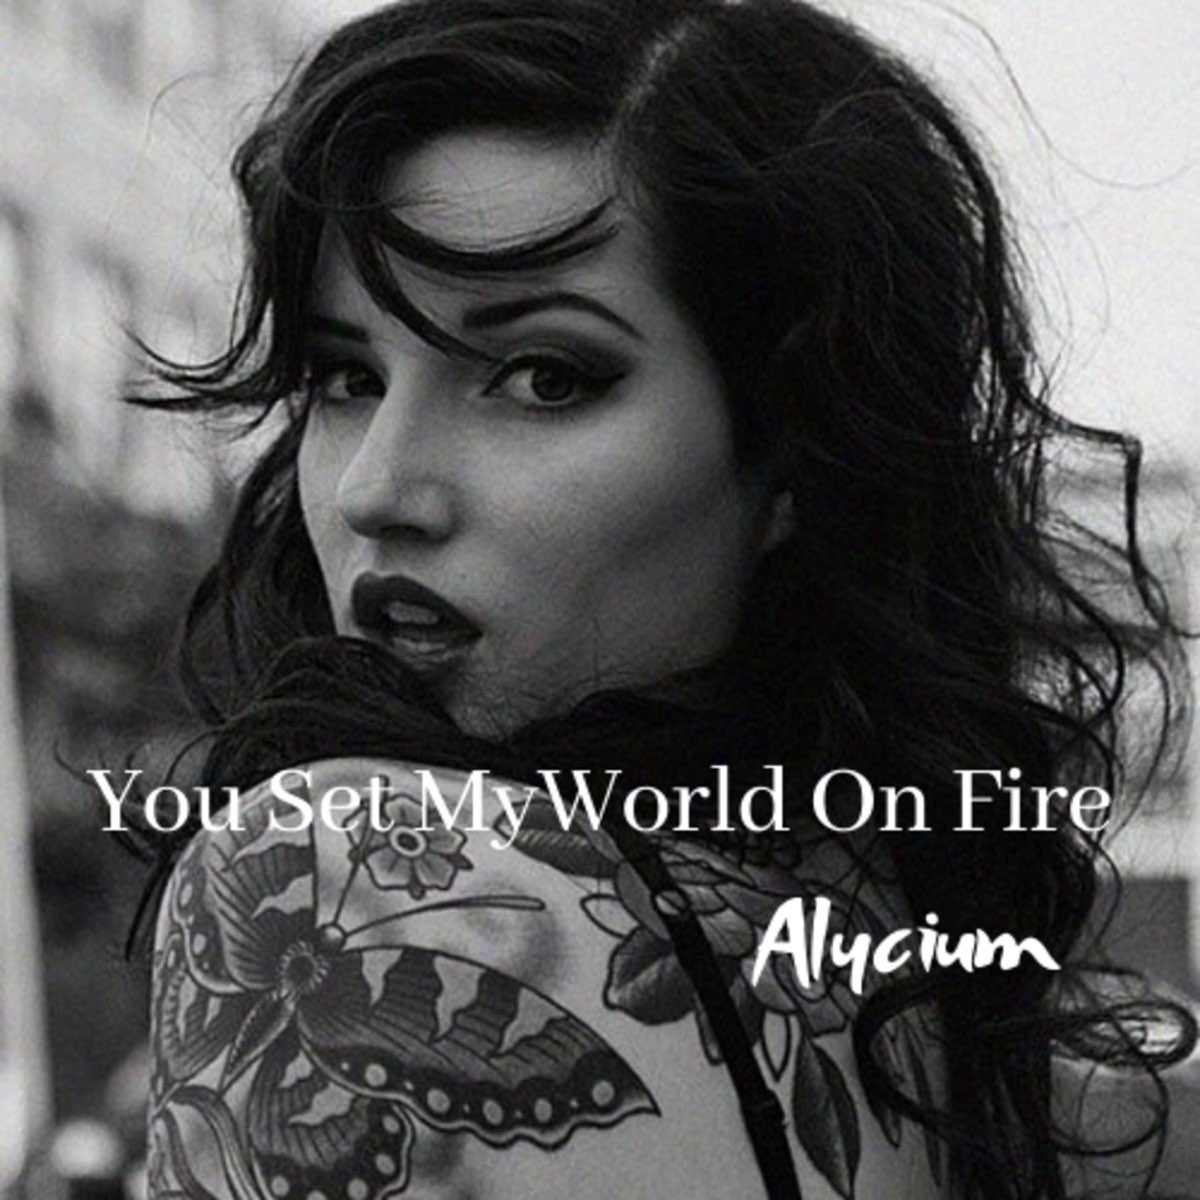 alycium از set me on fire دانلود آهنگ